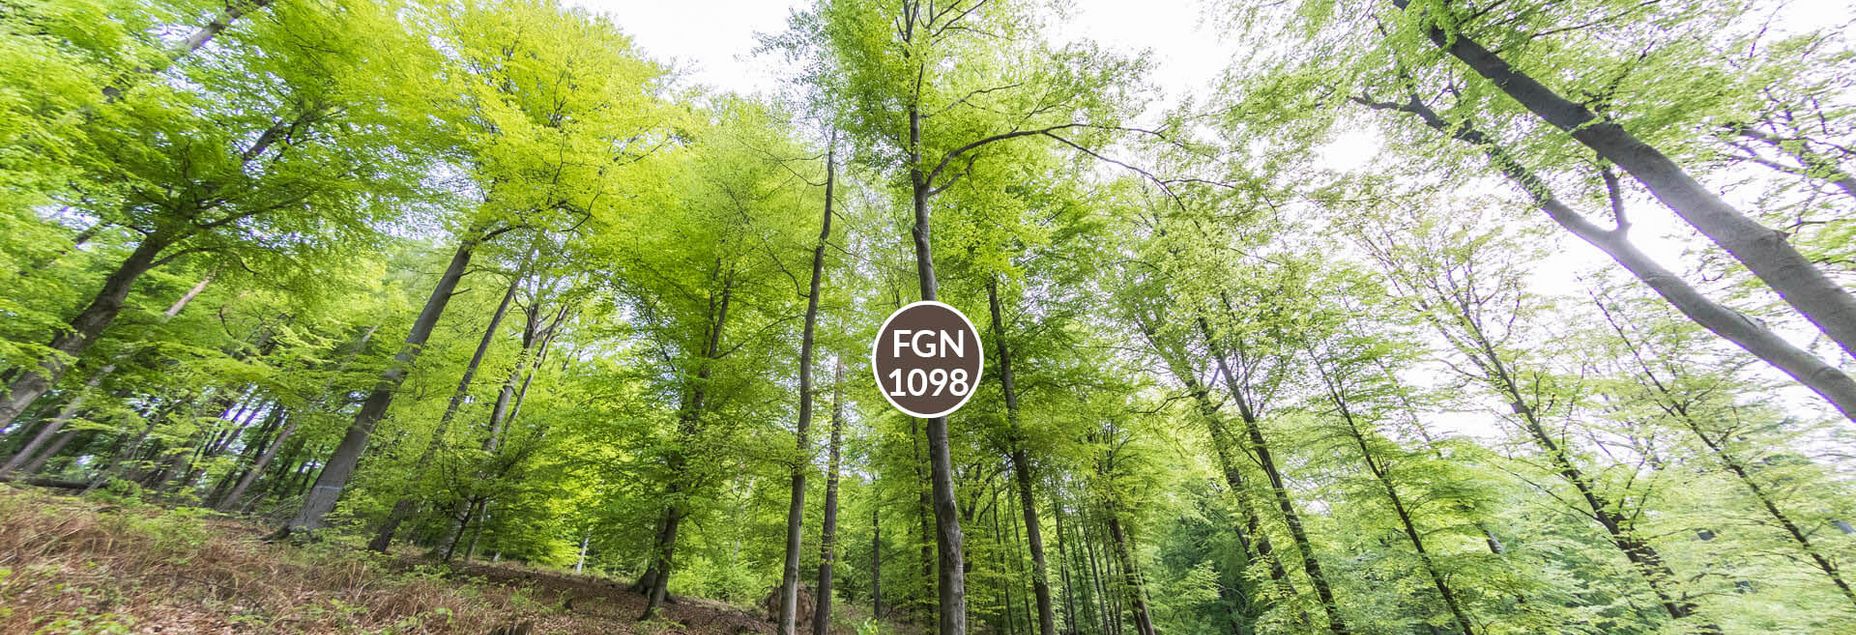 Baum FGN 1098 - Fisheyeperspektive